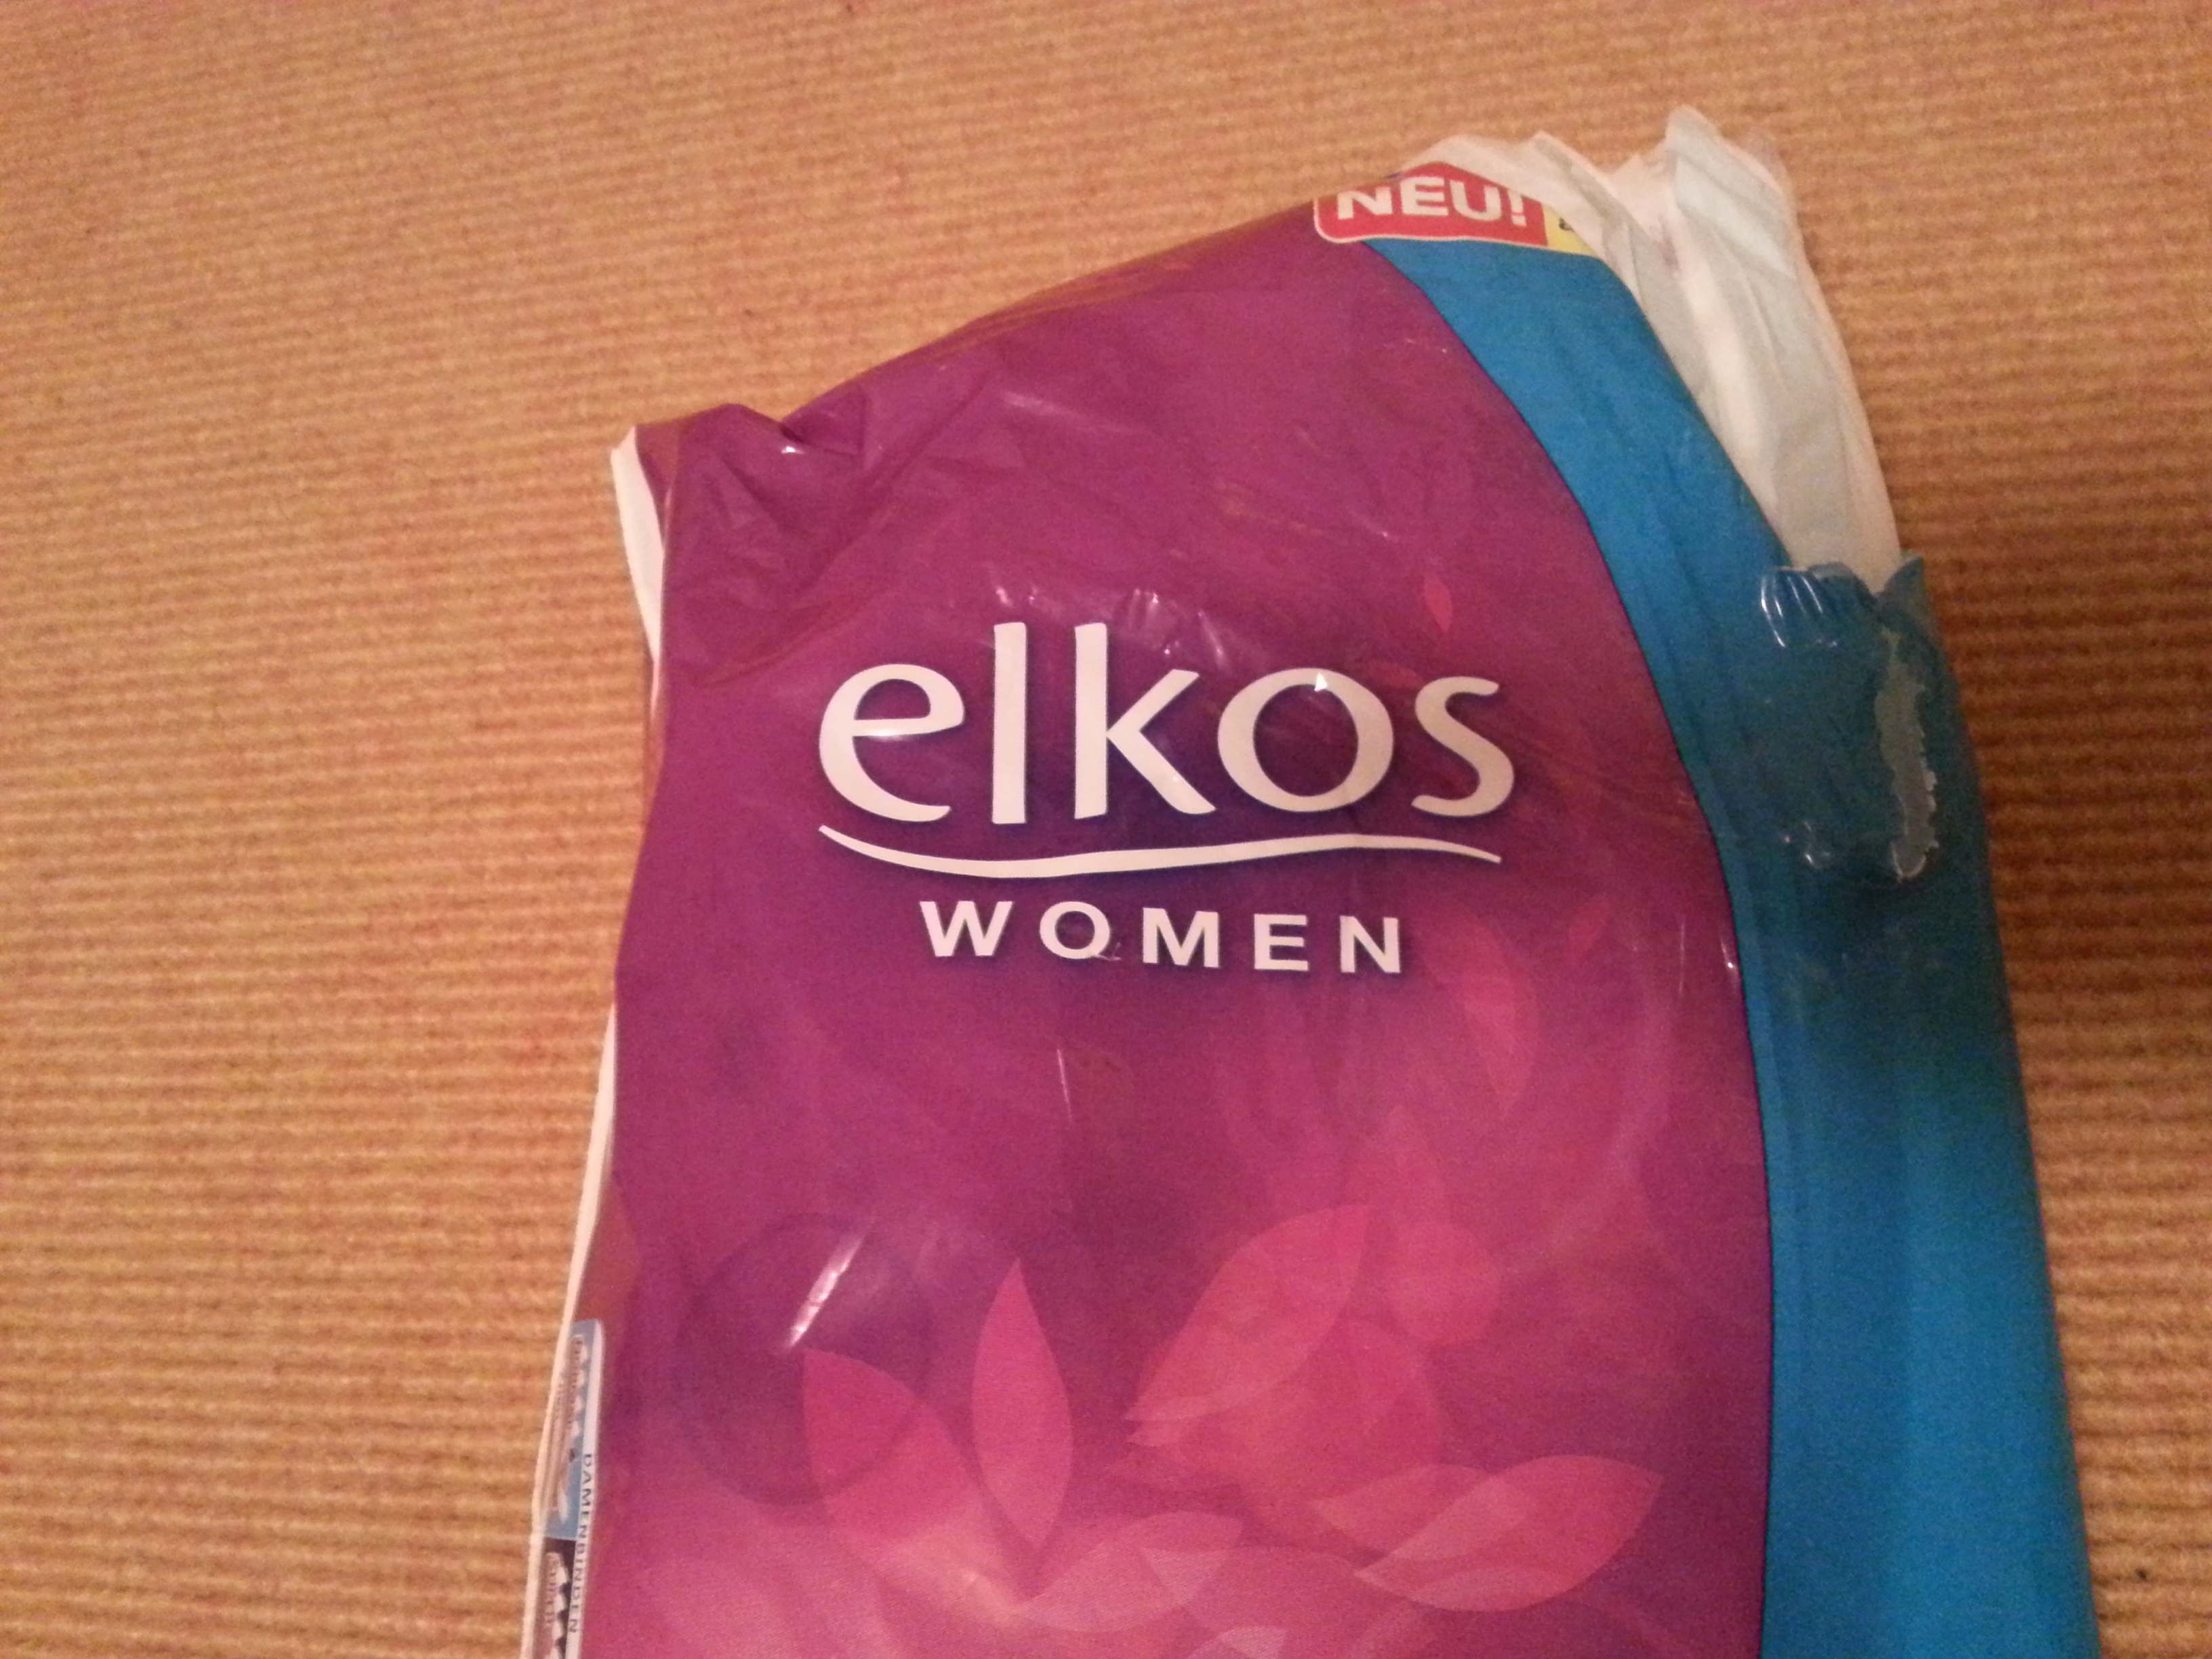 Elkos Women.jpg